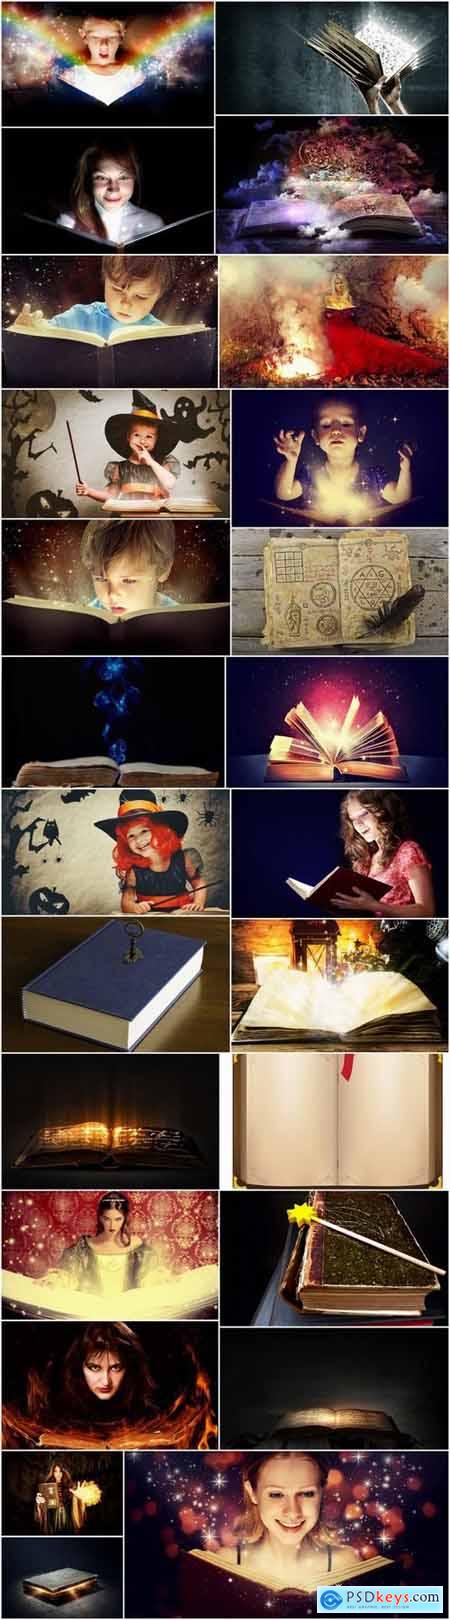 Magical magic wizardry book 25 HQ Jpeg